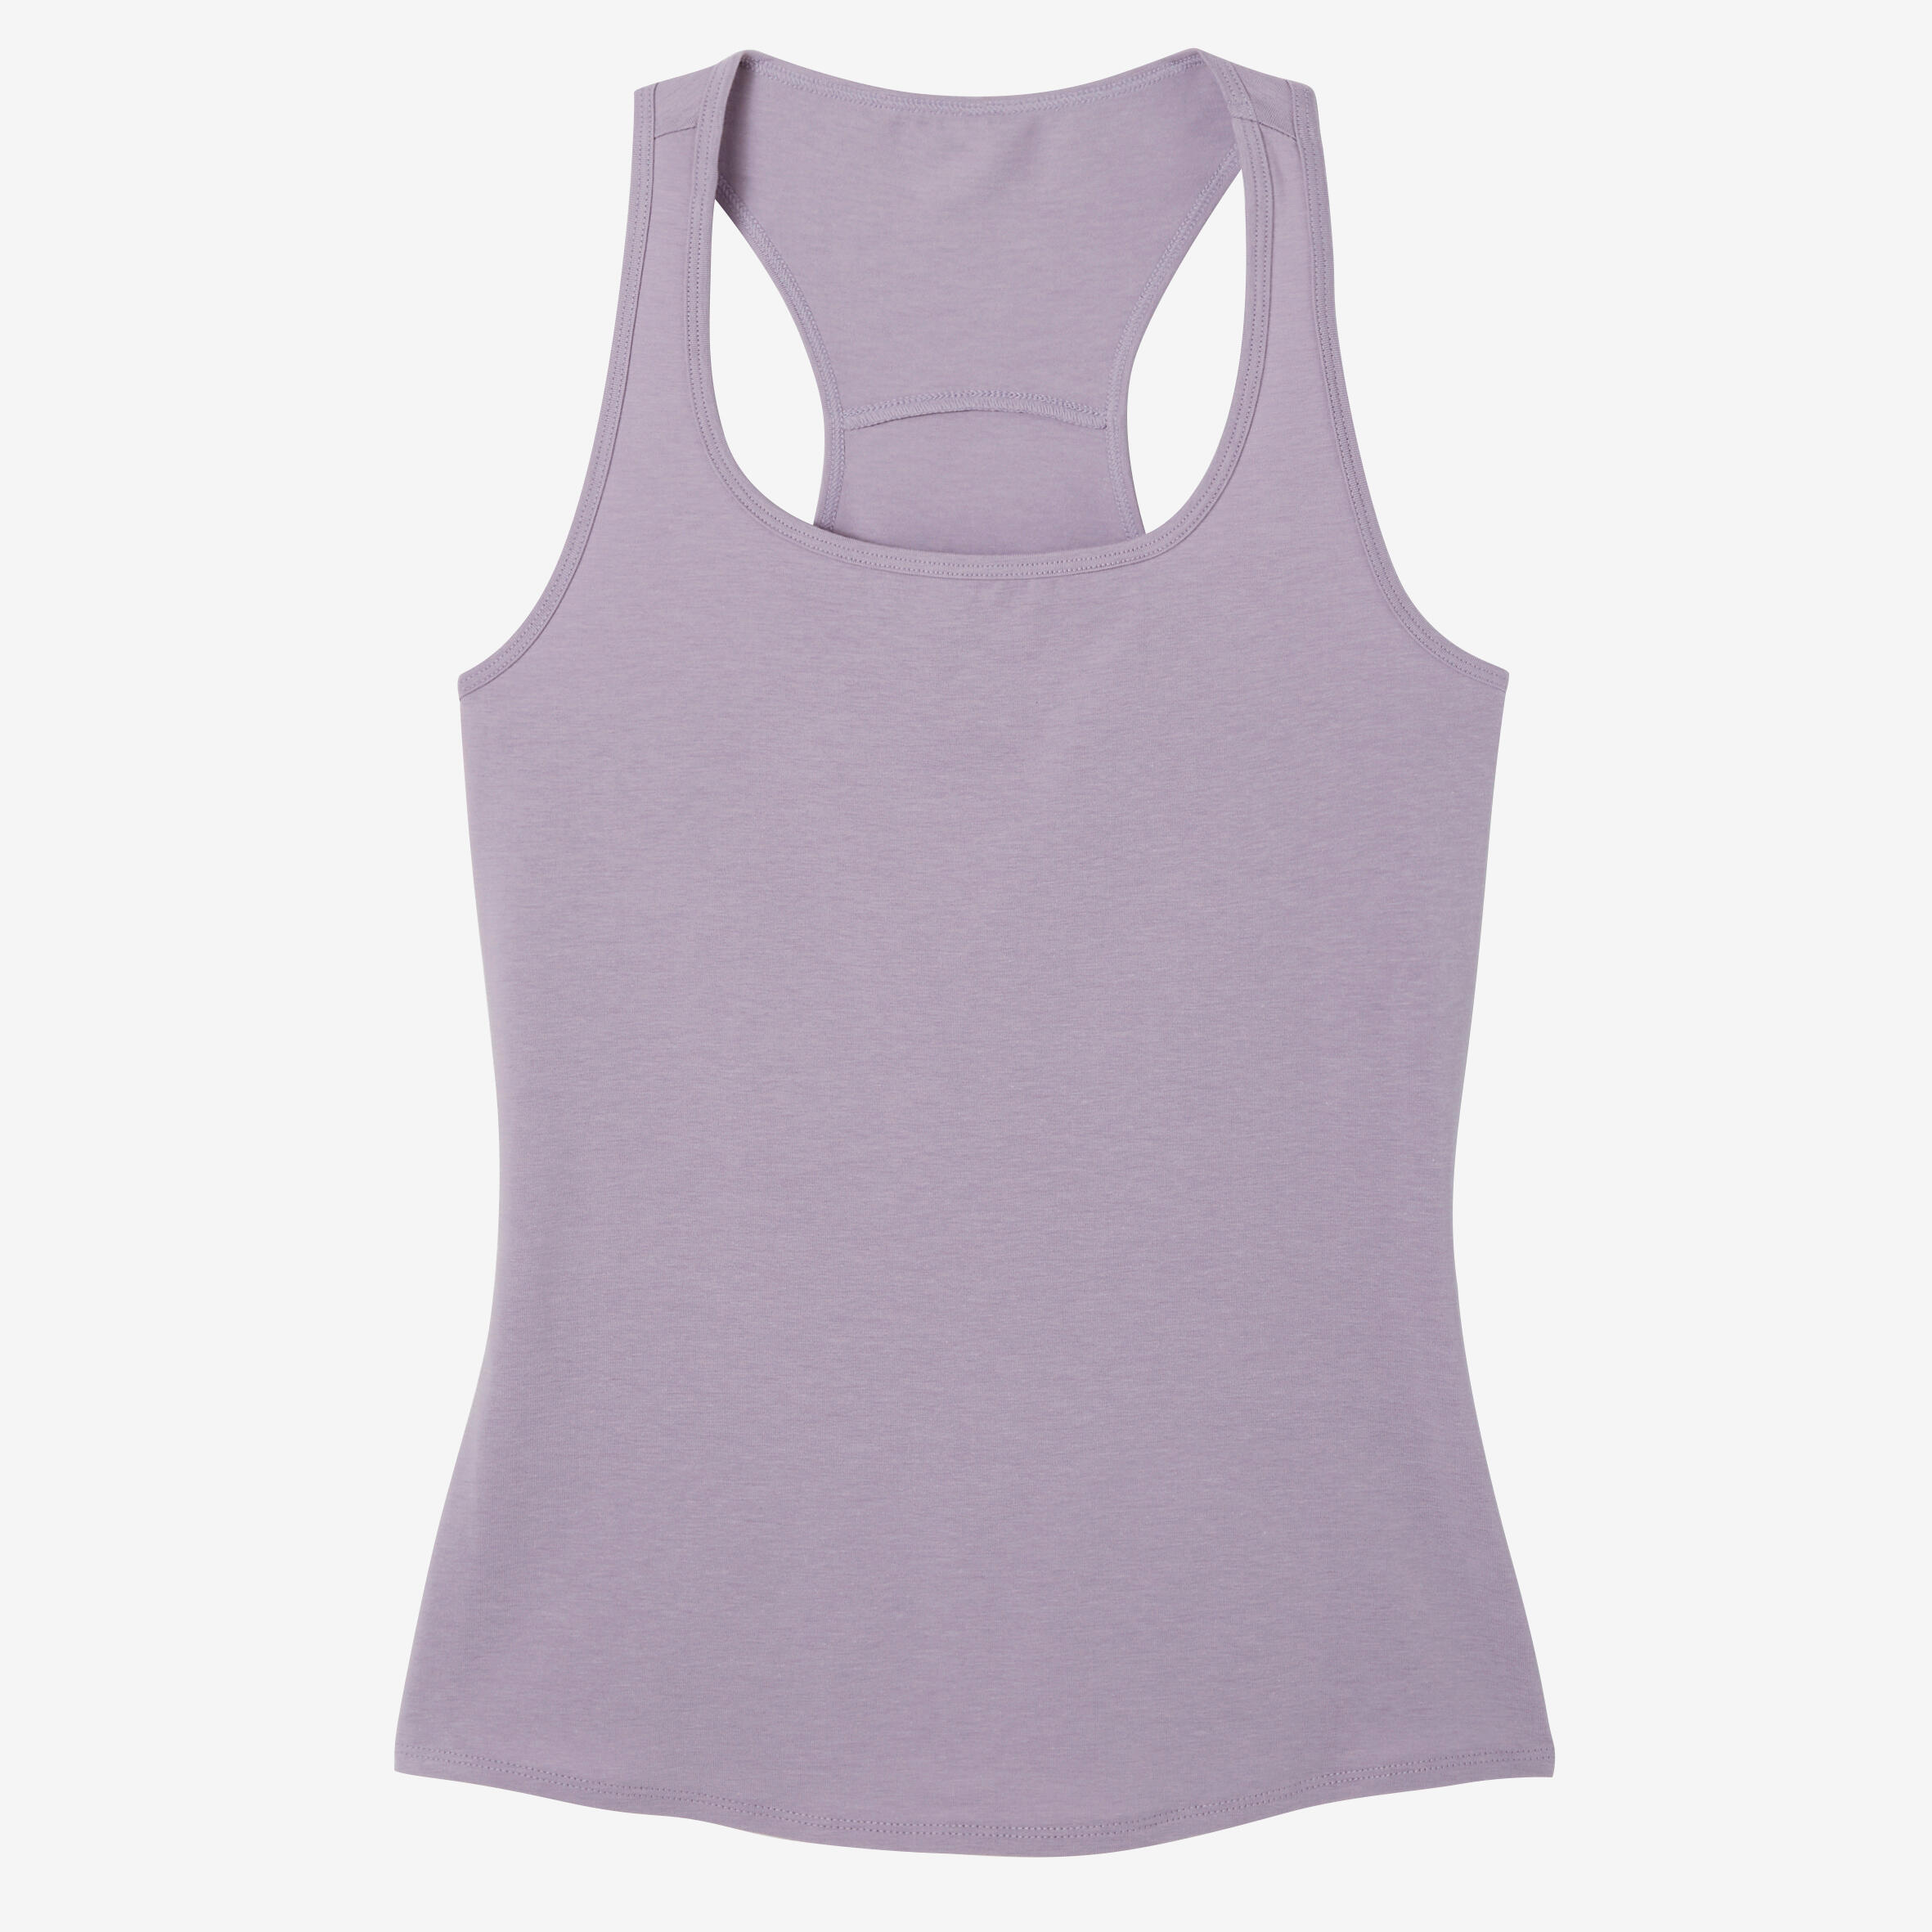 Women's Slim-Fit Fitness Tank Top 500 - Purple 6/6